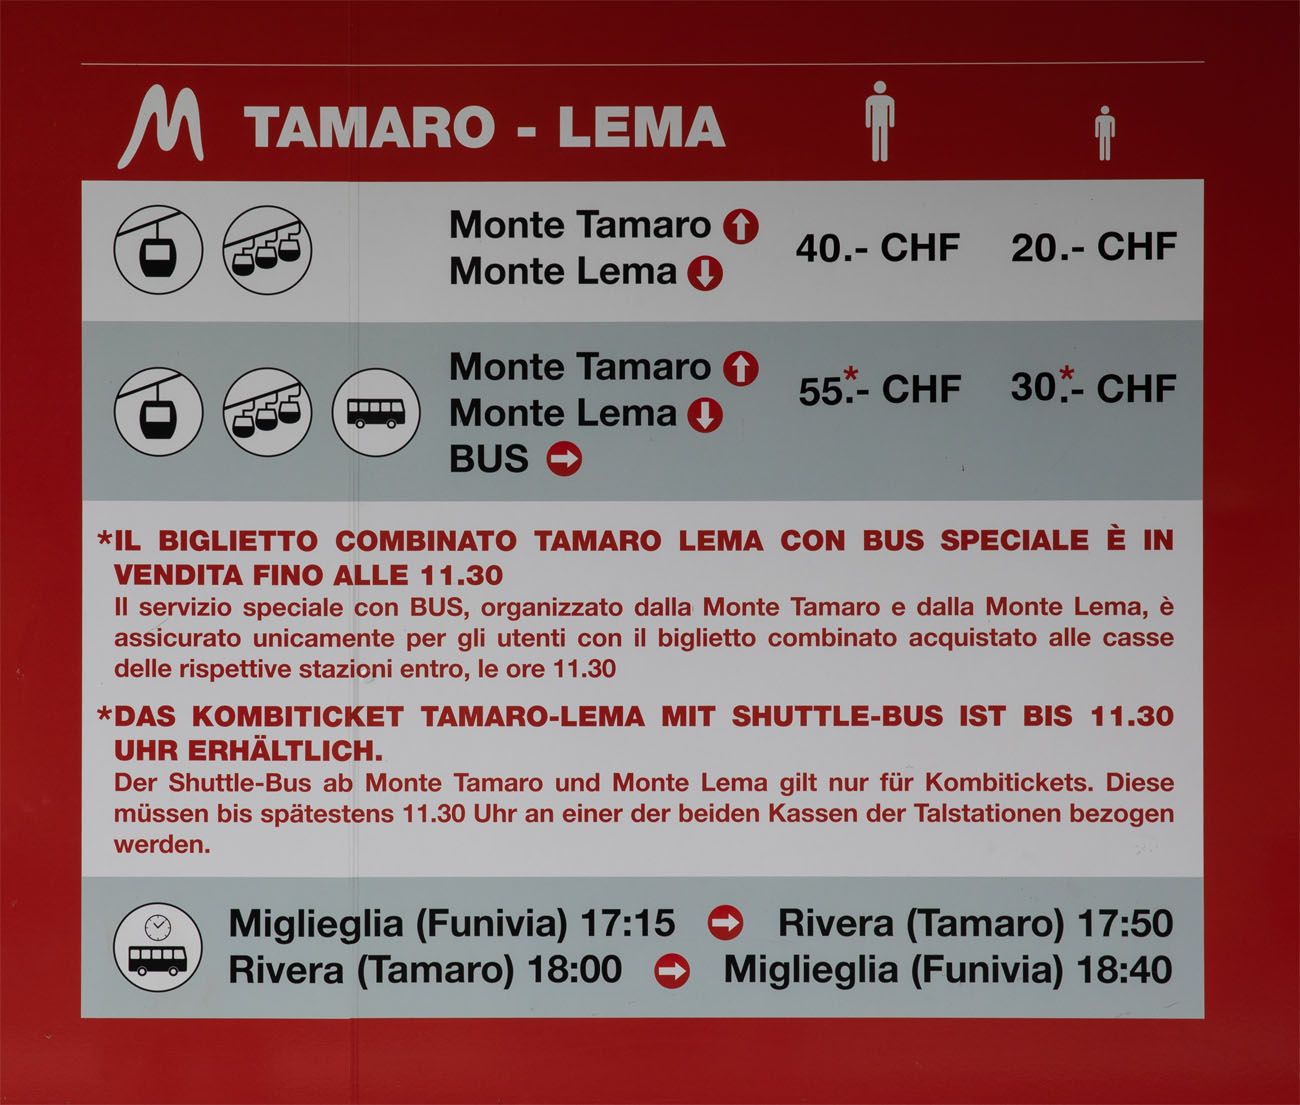 Tamaro Lema Shuttle Bus